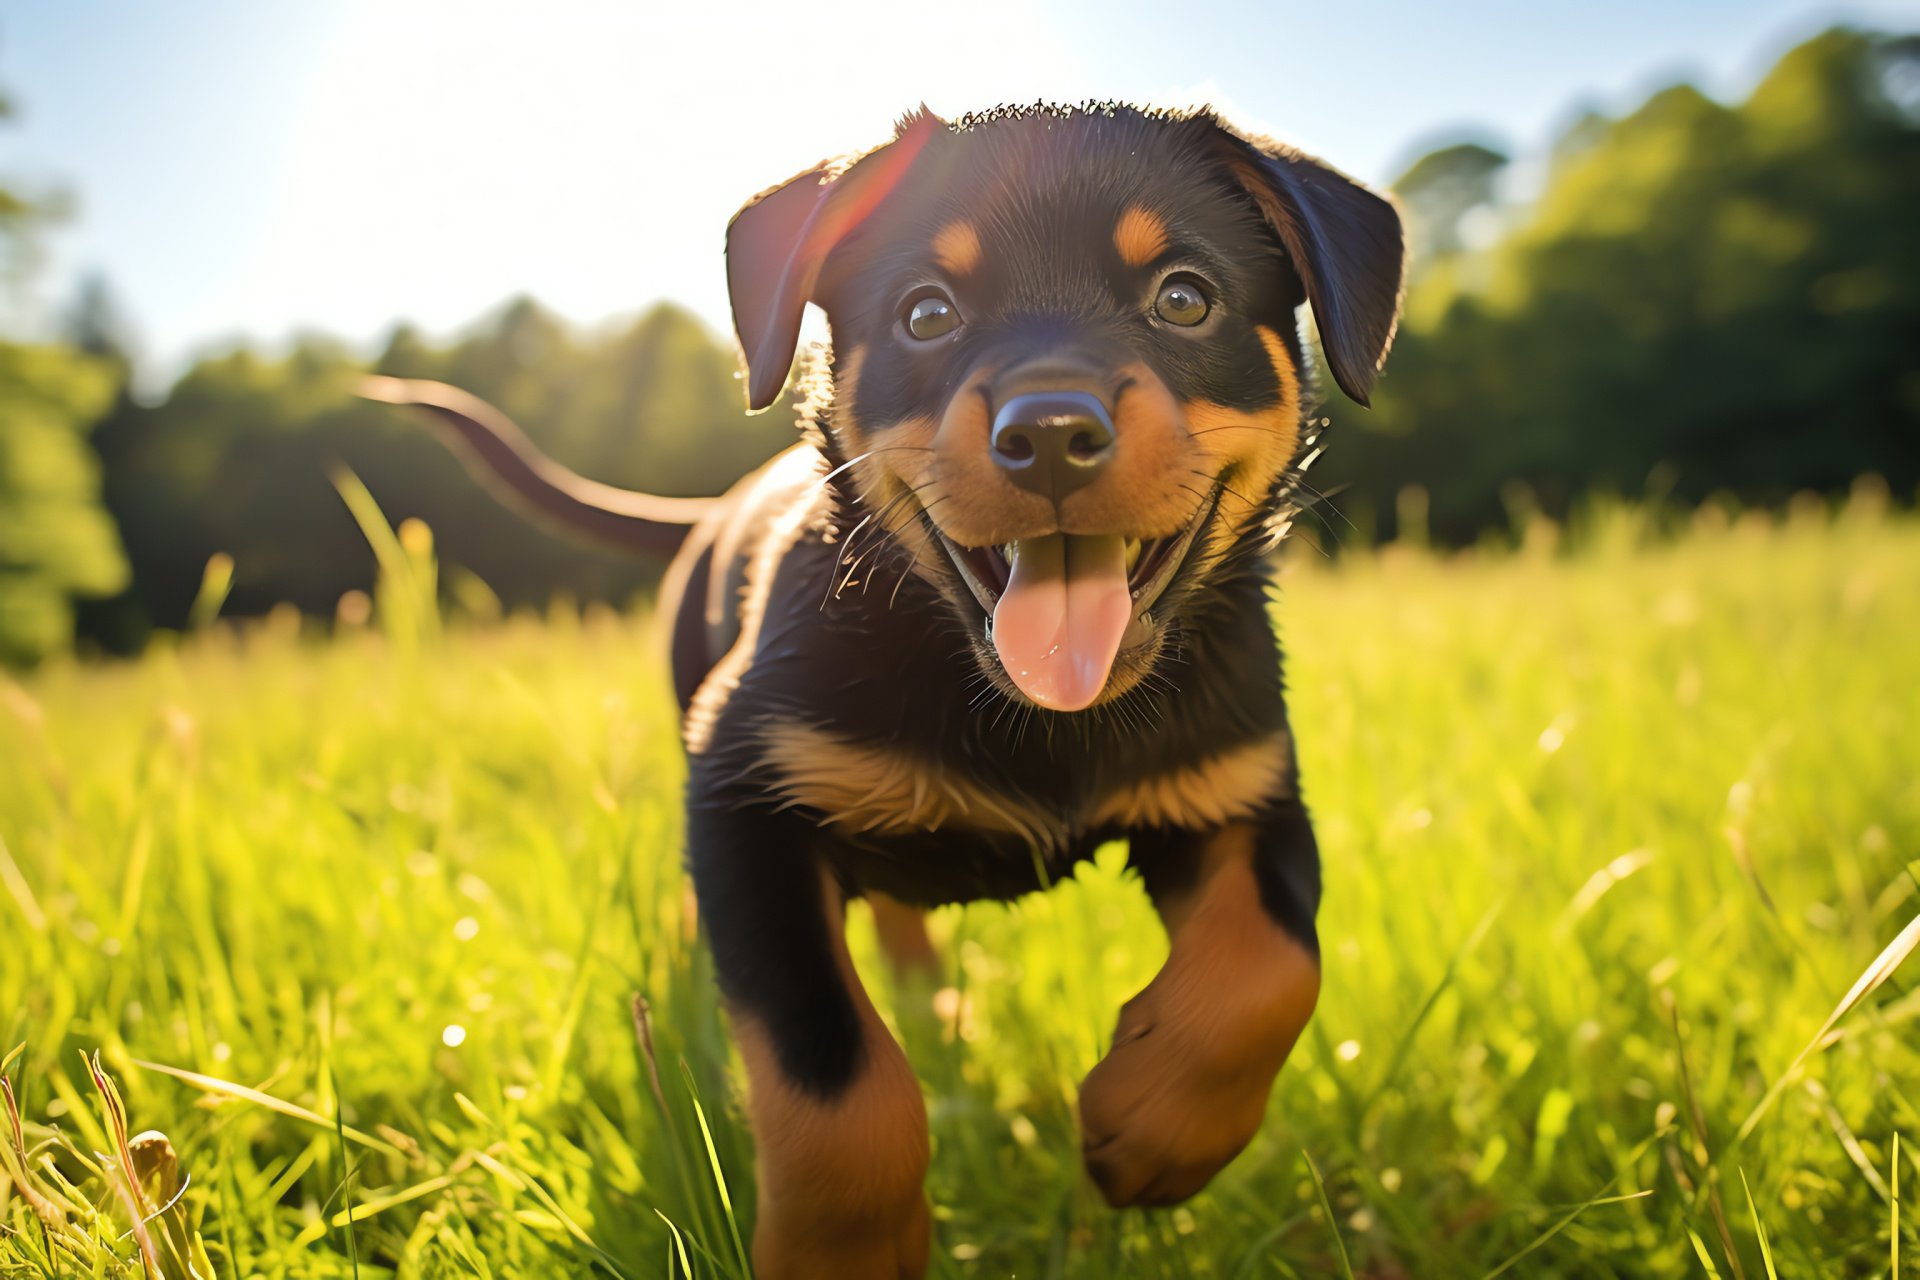 Playful Rottweiler pup, exuberant expression, outdoor setting, sunlit play, jovial ambiance, HD Desktop Wallpaper